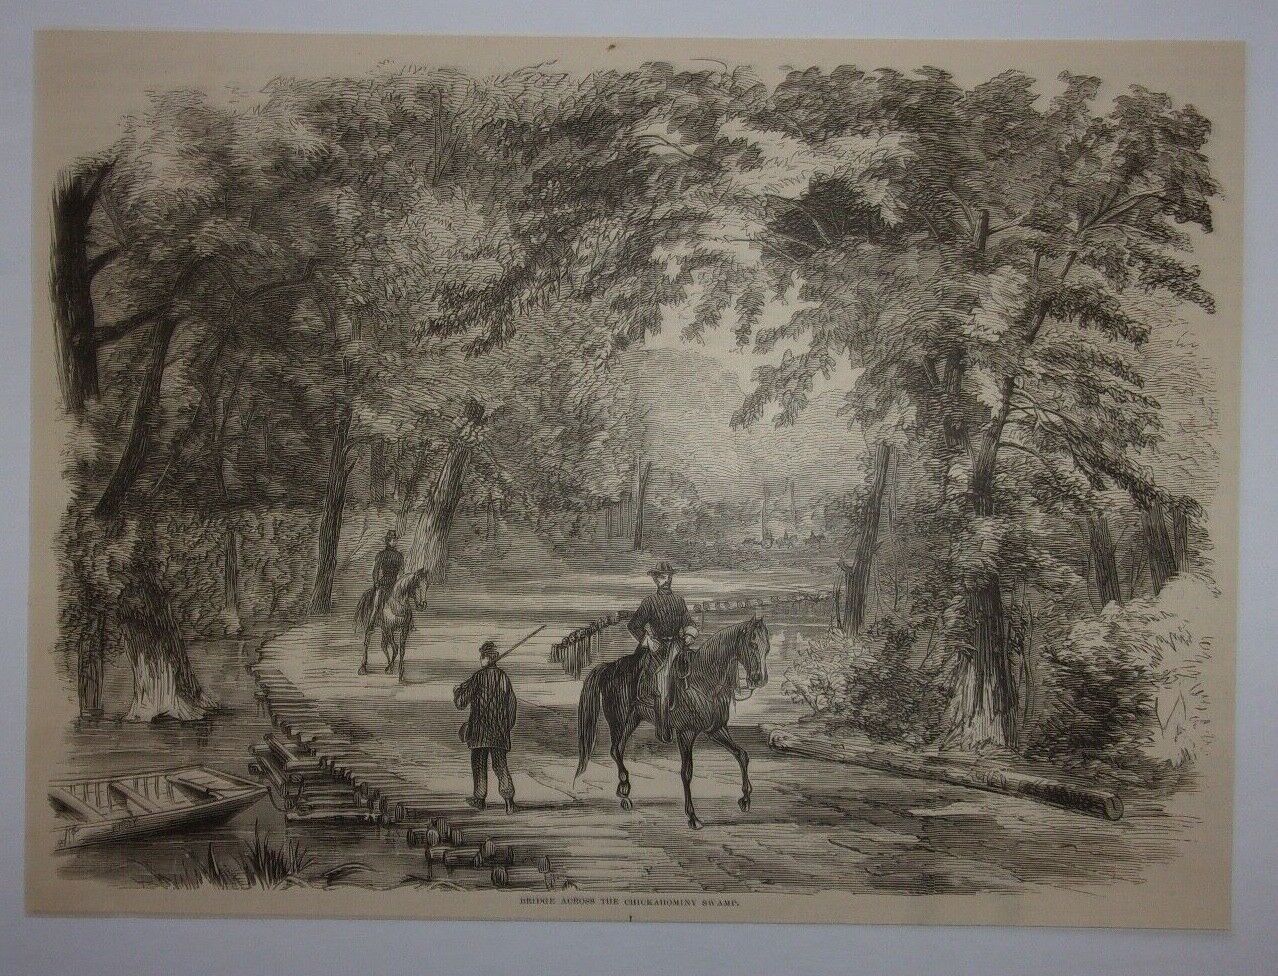 1866 Bridge Across the Chickahominy Swamp (Civil War) Engraving